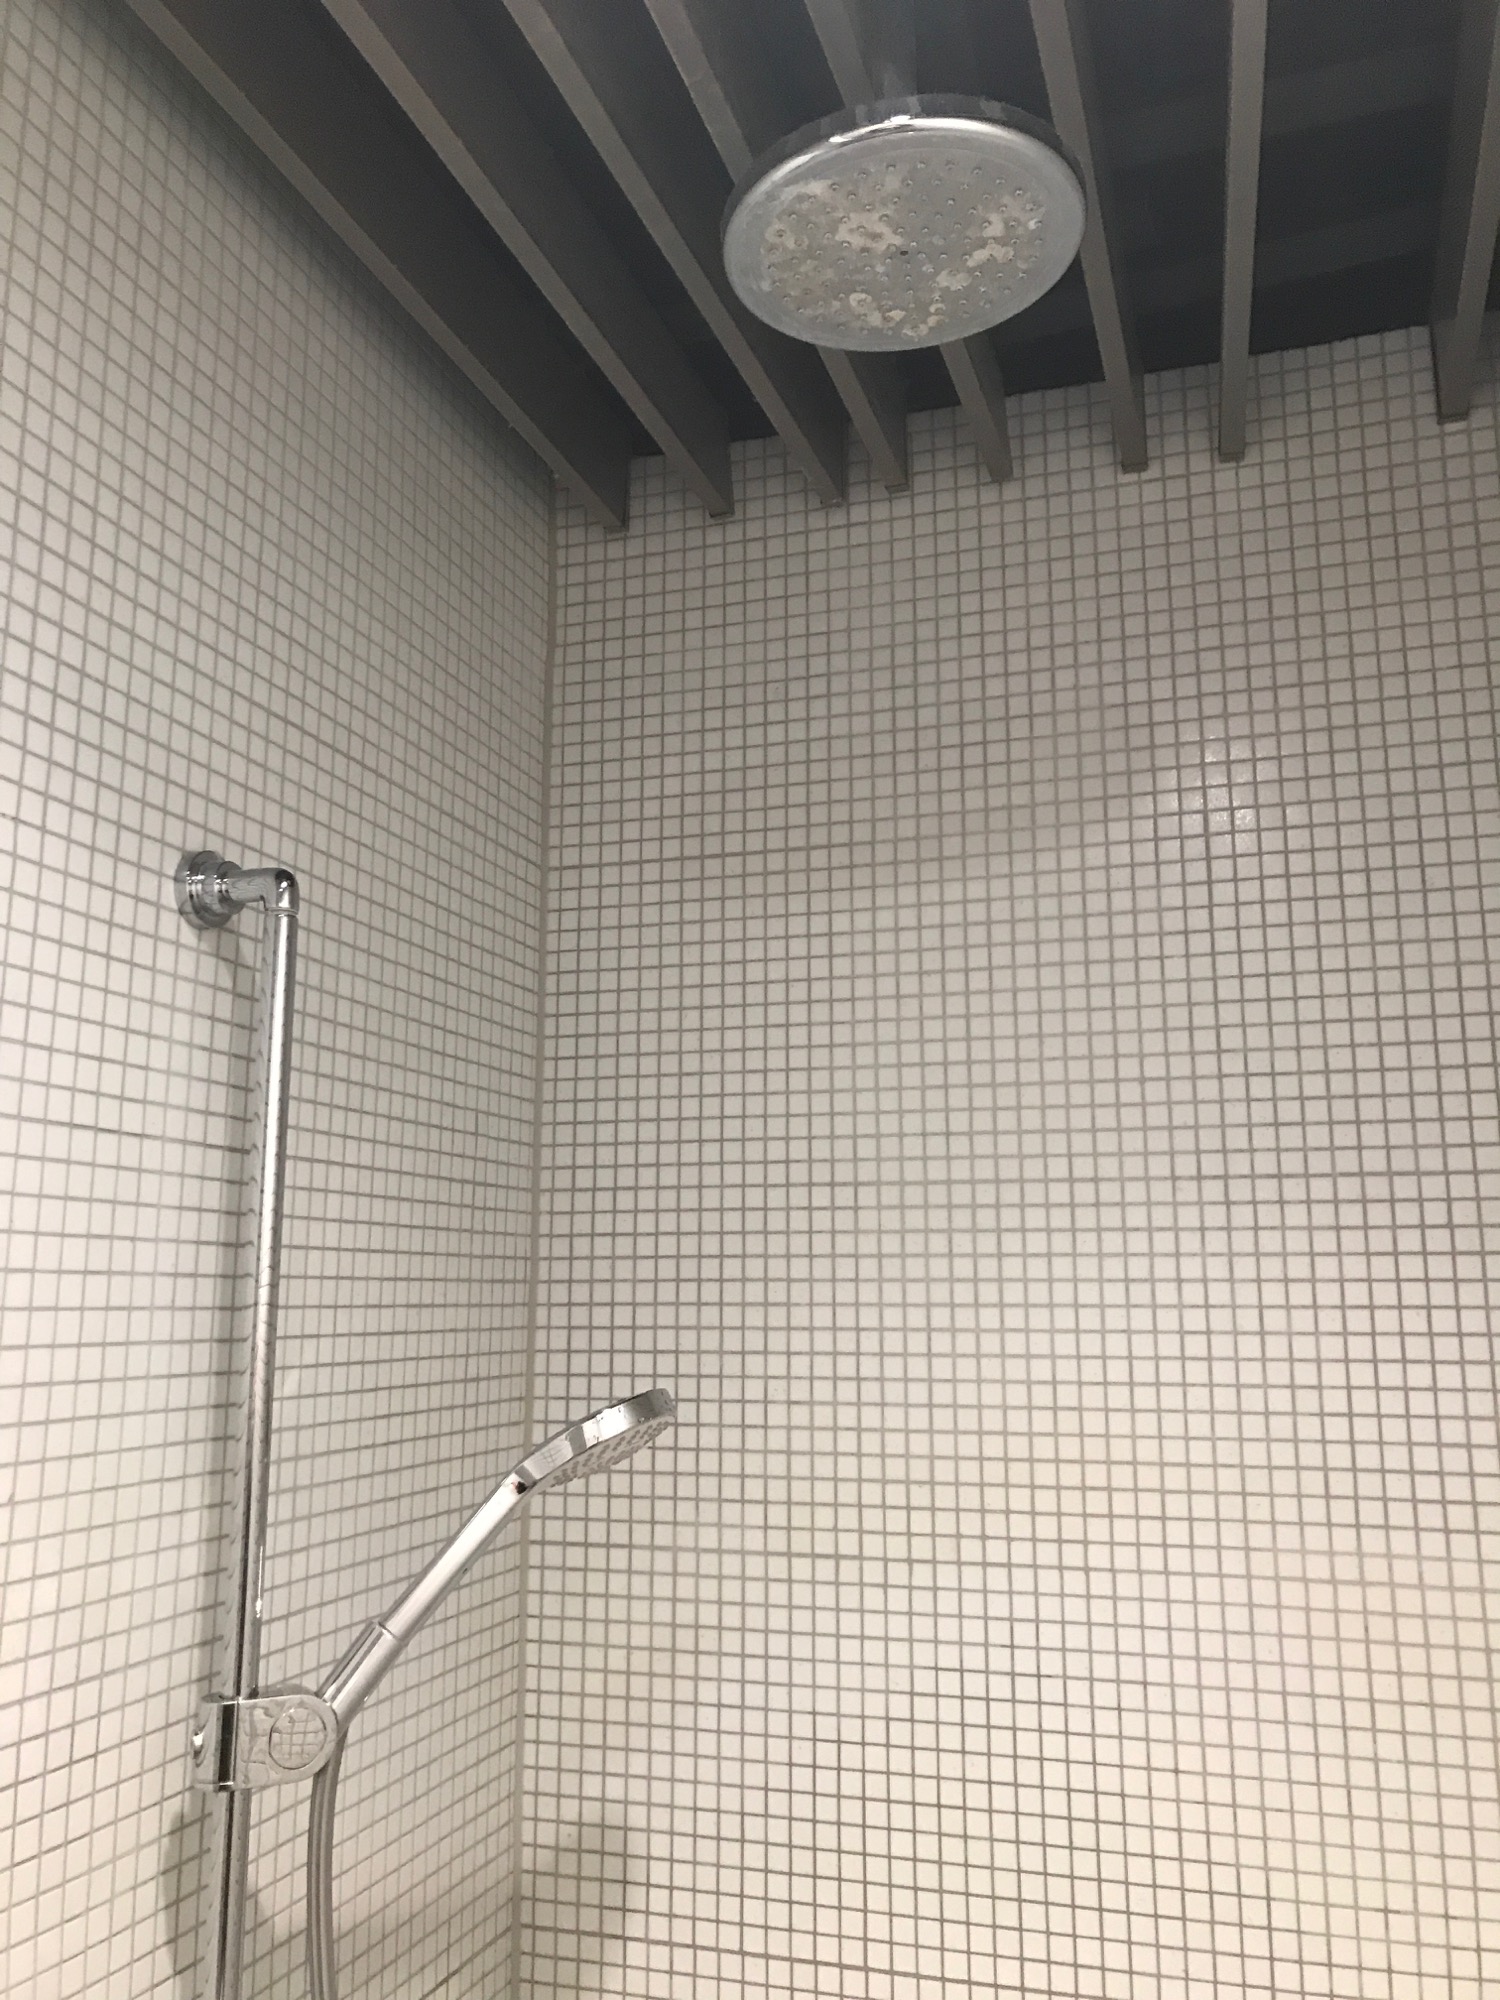 a shower head in a bathroom